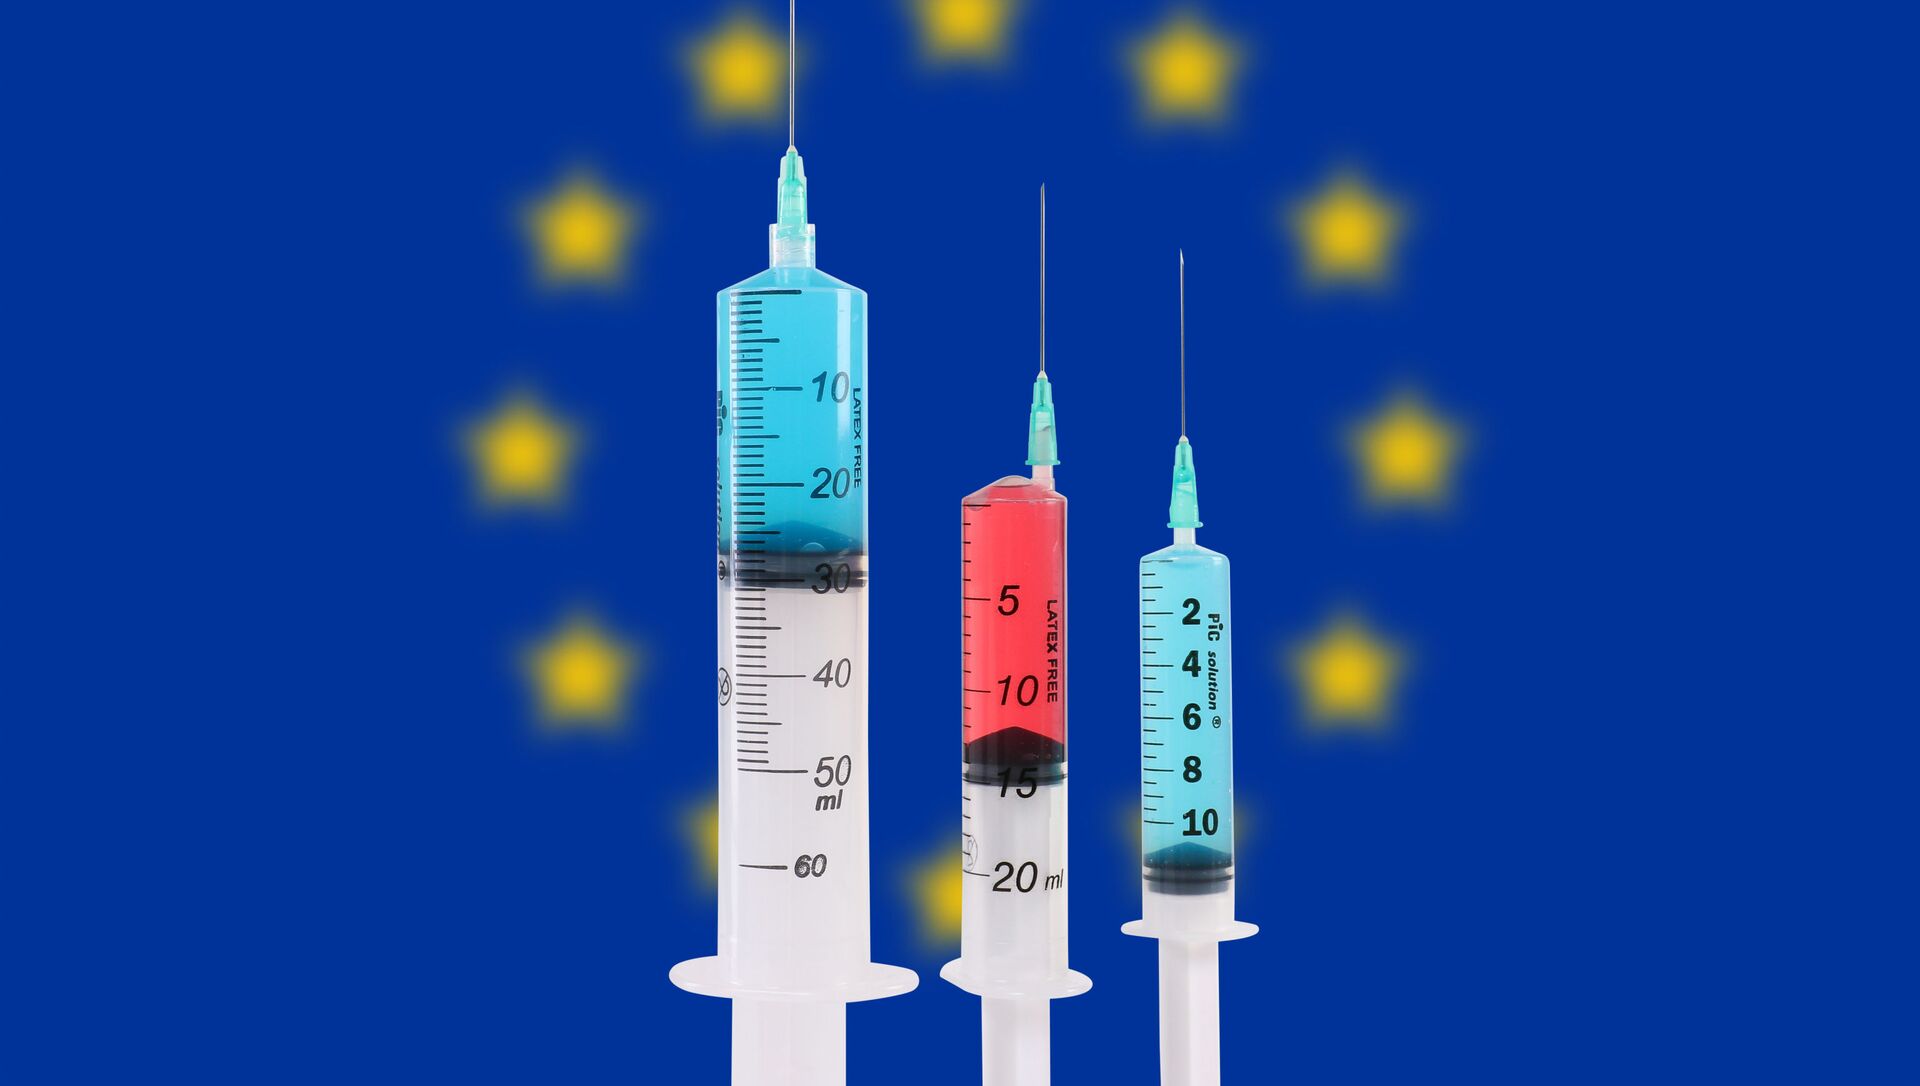 Campagne de vaccination en Europe (image d'illustration) - Sputnik Afrique, 1920, 17.02.2021